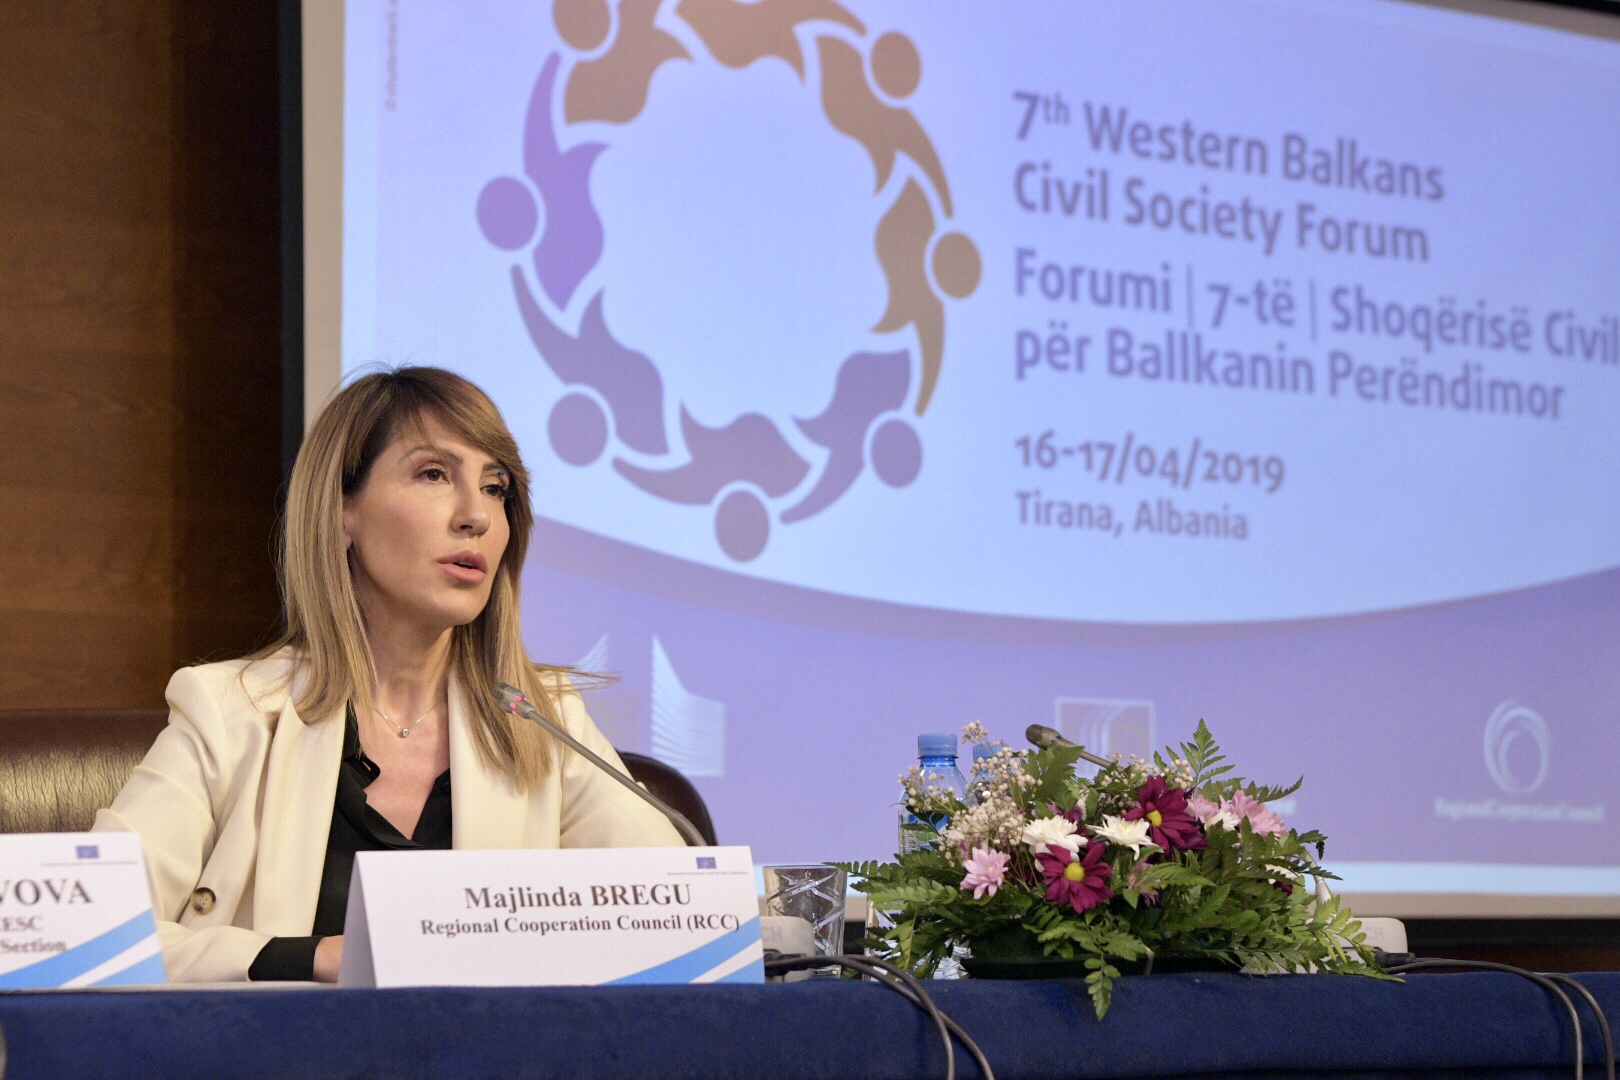 RCC Secretary General Majlinda Bregu at the 7th Western Balkans Civil Society Forum, in Tirana on 16 April 2019 (Photo: RCC/Armand Habazaj)